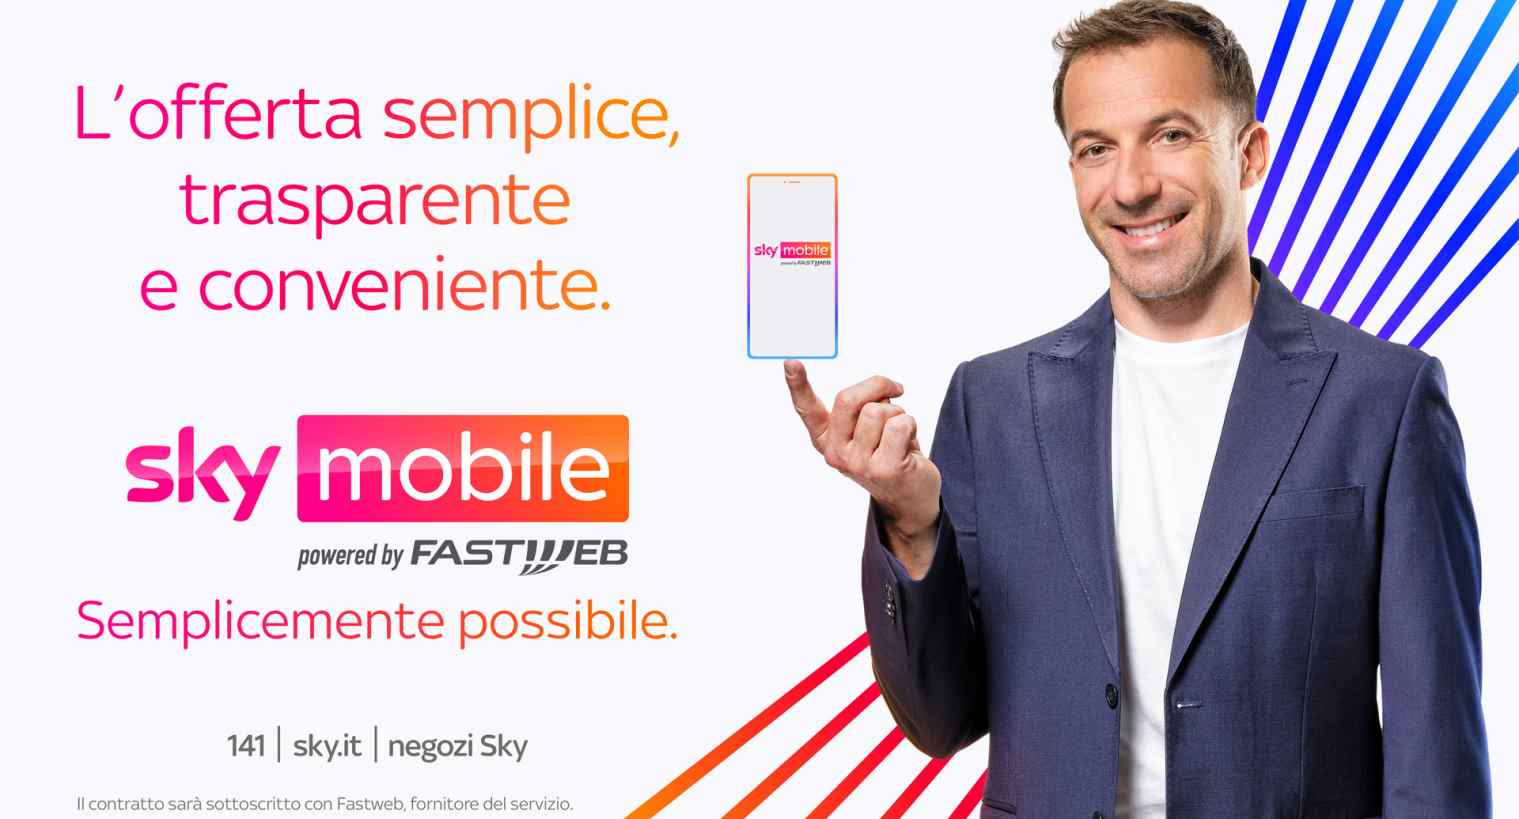 Al via Sky Mobile powered by Fastweb: un mondo più semplice con Alessandro Del Piero